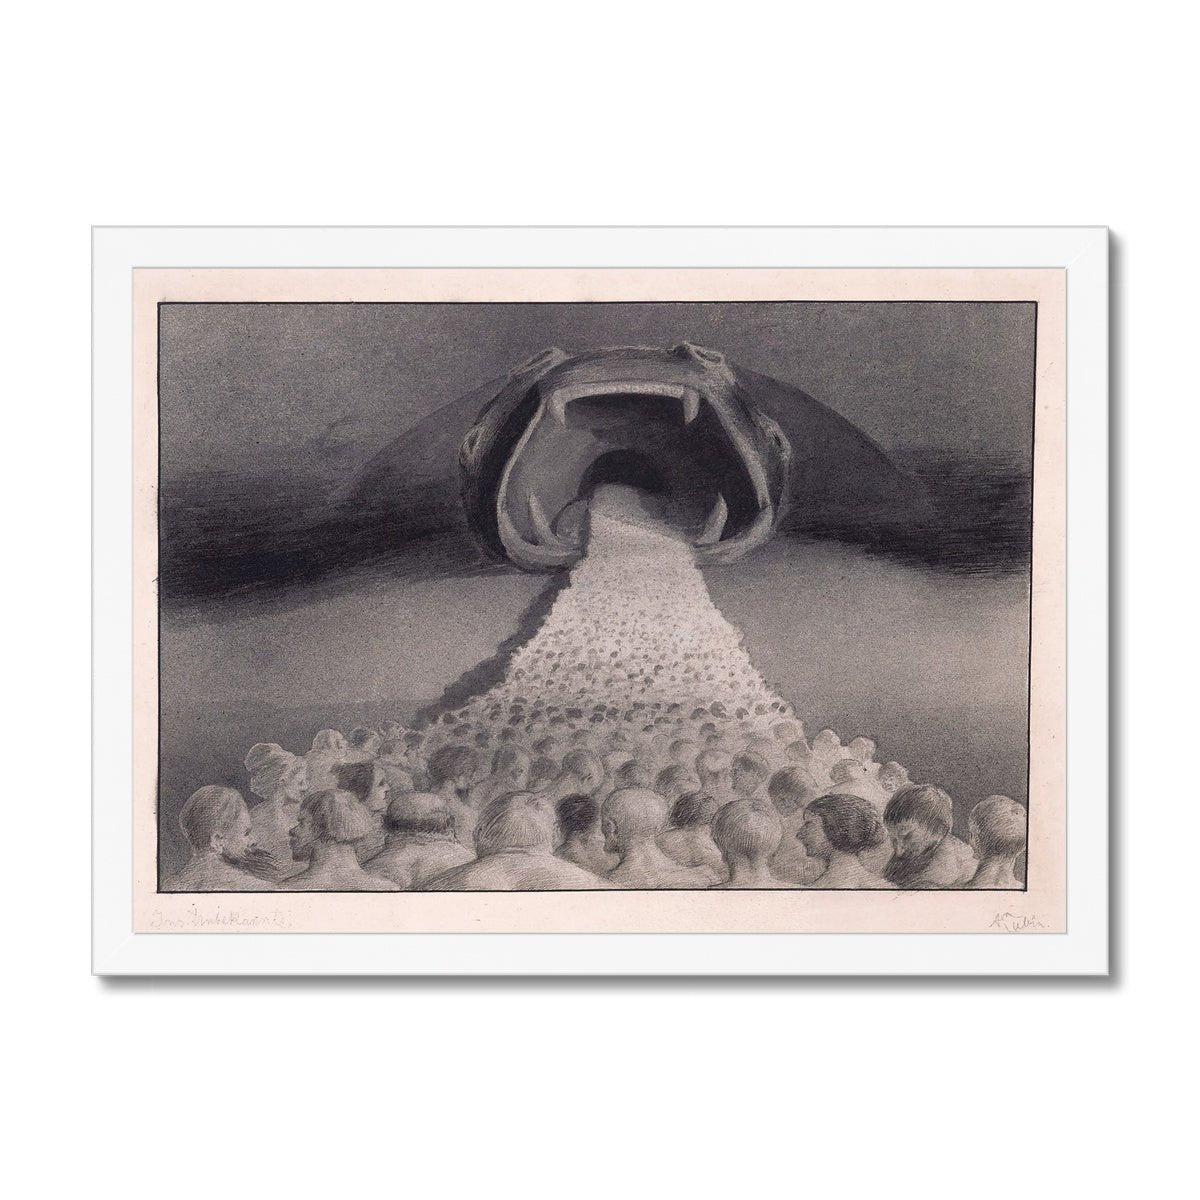 Framed Print A4 Landscape / White Frame Framed Alfred Kubin - Into The Unknown Symbolist Surreal Wall Art Antique Gothic Supernatural Decor Dark Occult Framed Art Print